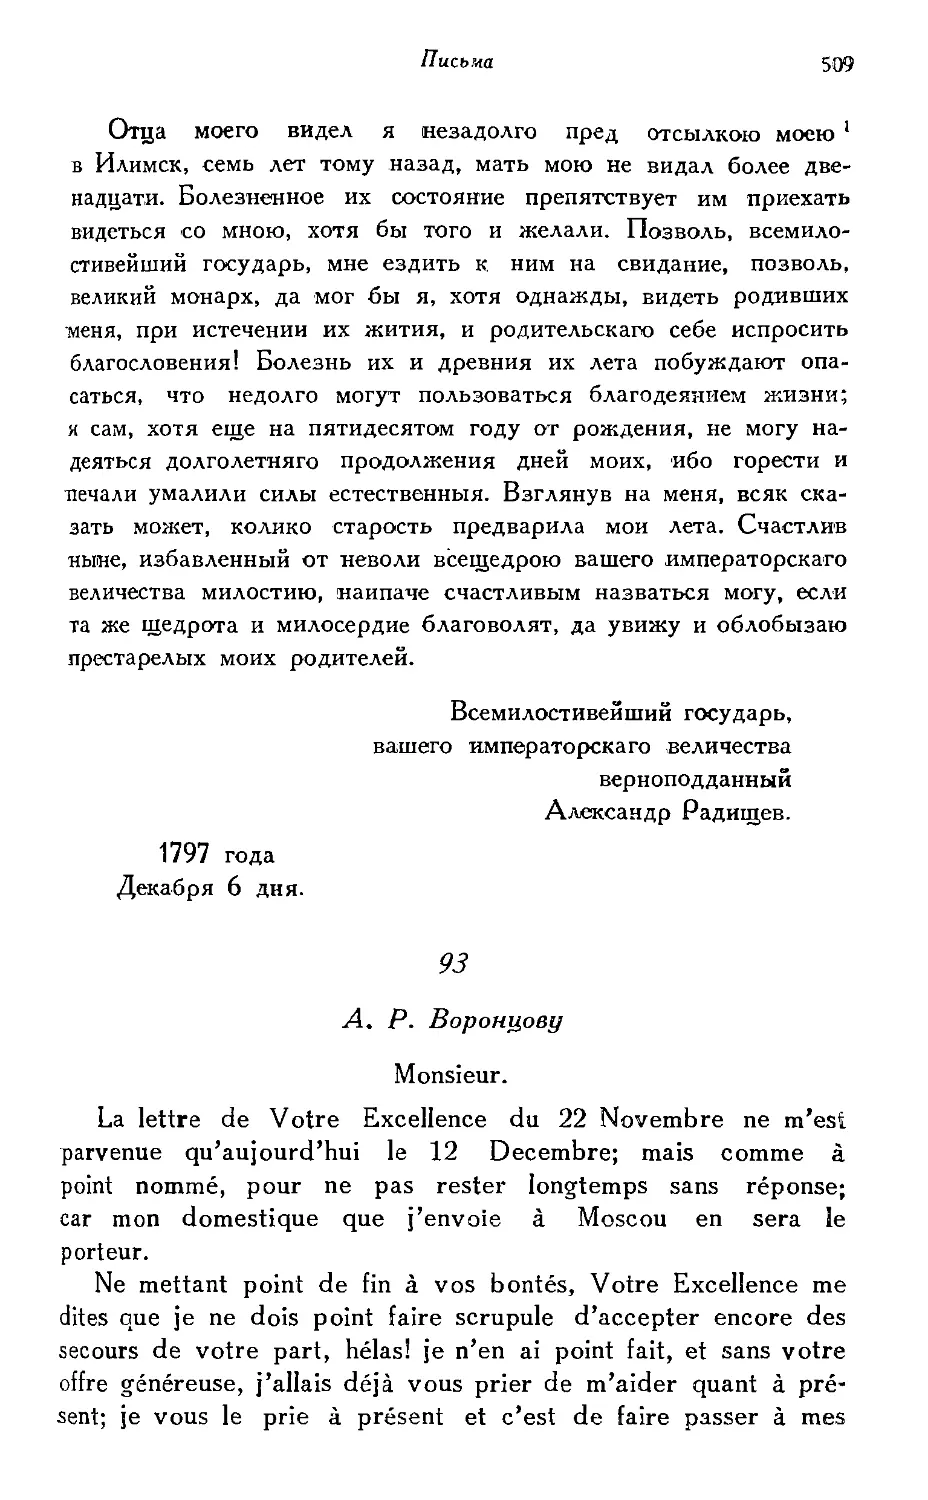 93—104. А. Р. Воронцову (1797—1800)